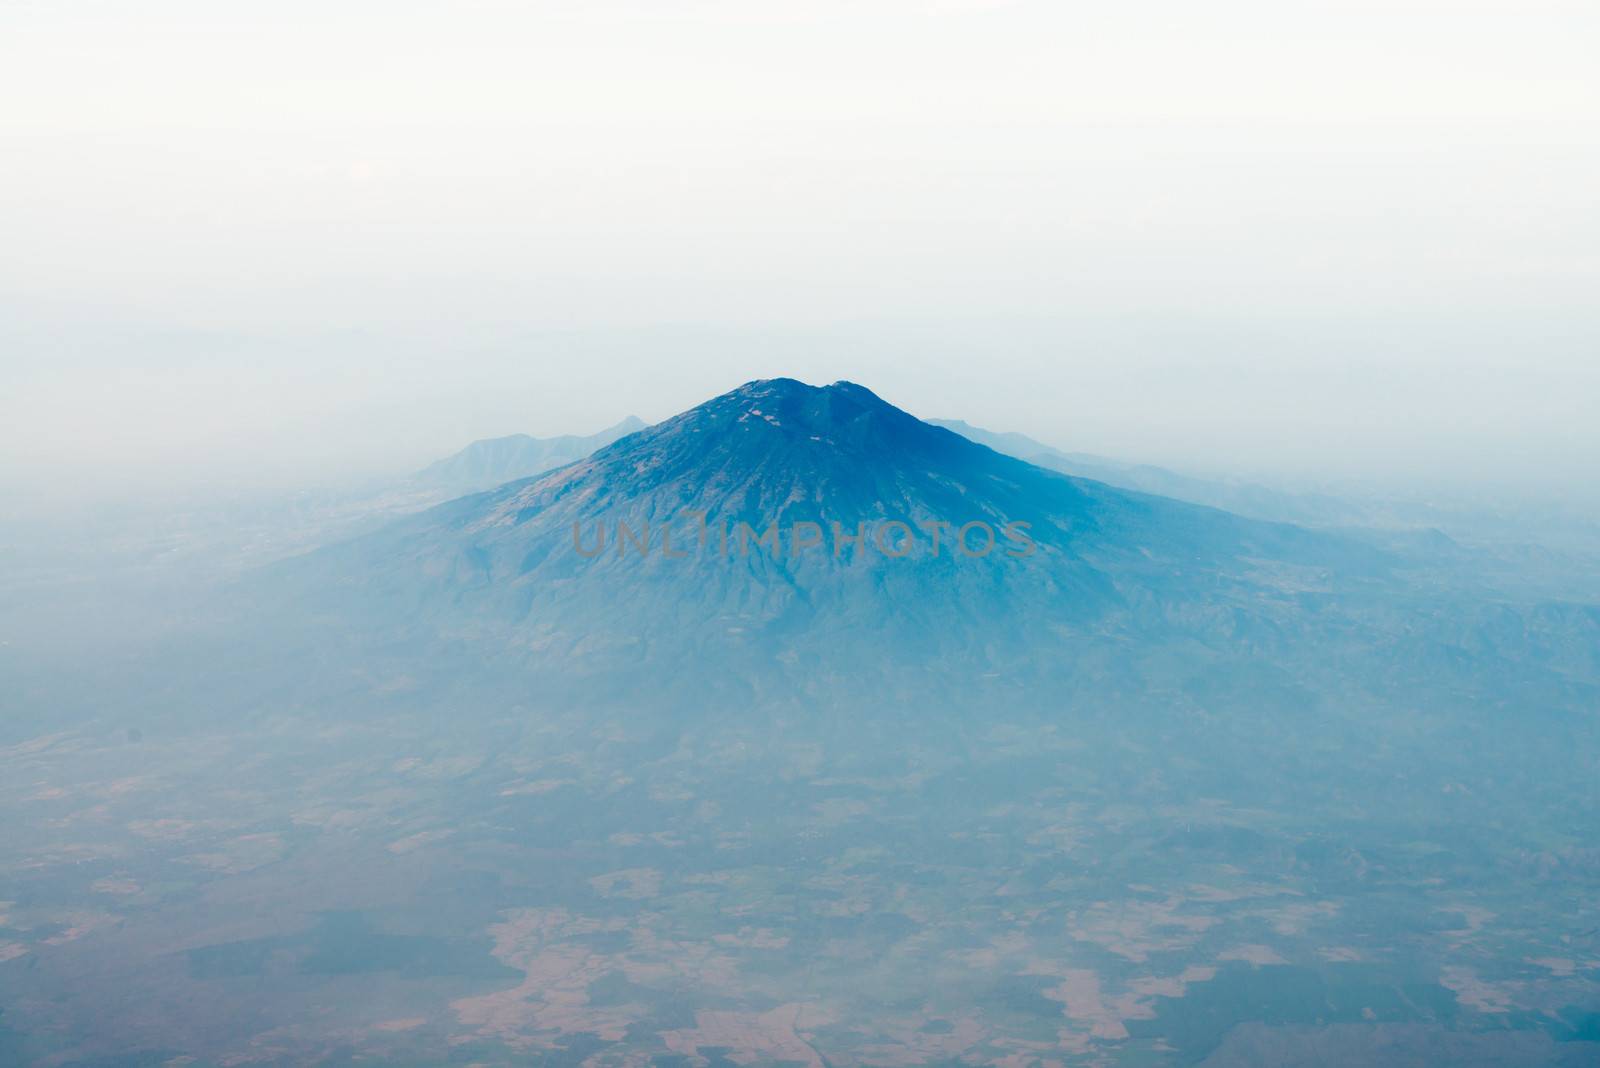 Volcano top under sky with foggy valley, bird's eye view. Java island, Indonesia